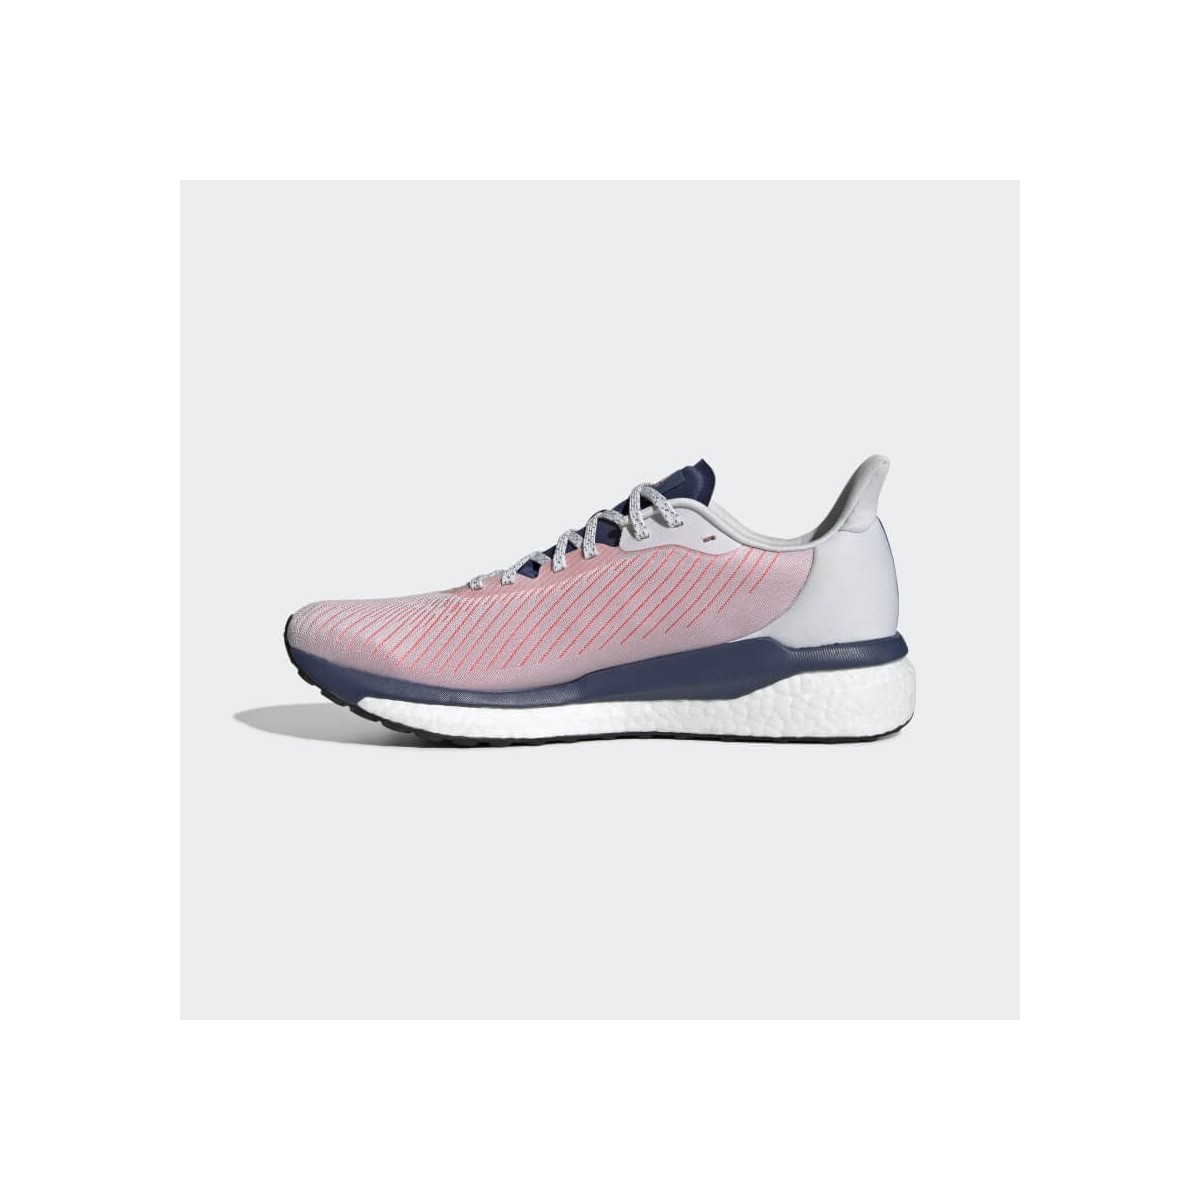 adidas-solar-drive-19-pink-blue-ss20-men-s-shoes.jpg